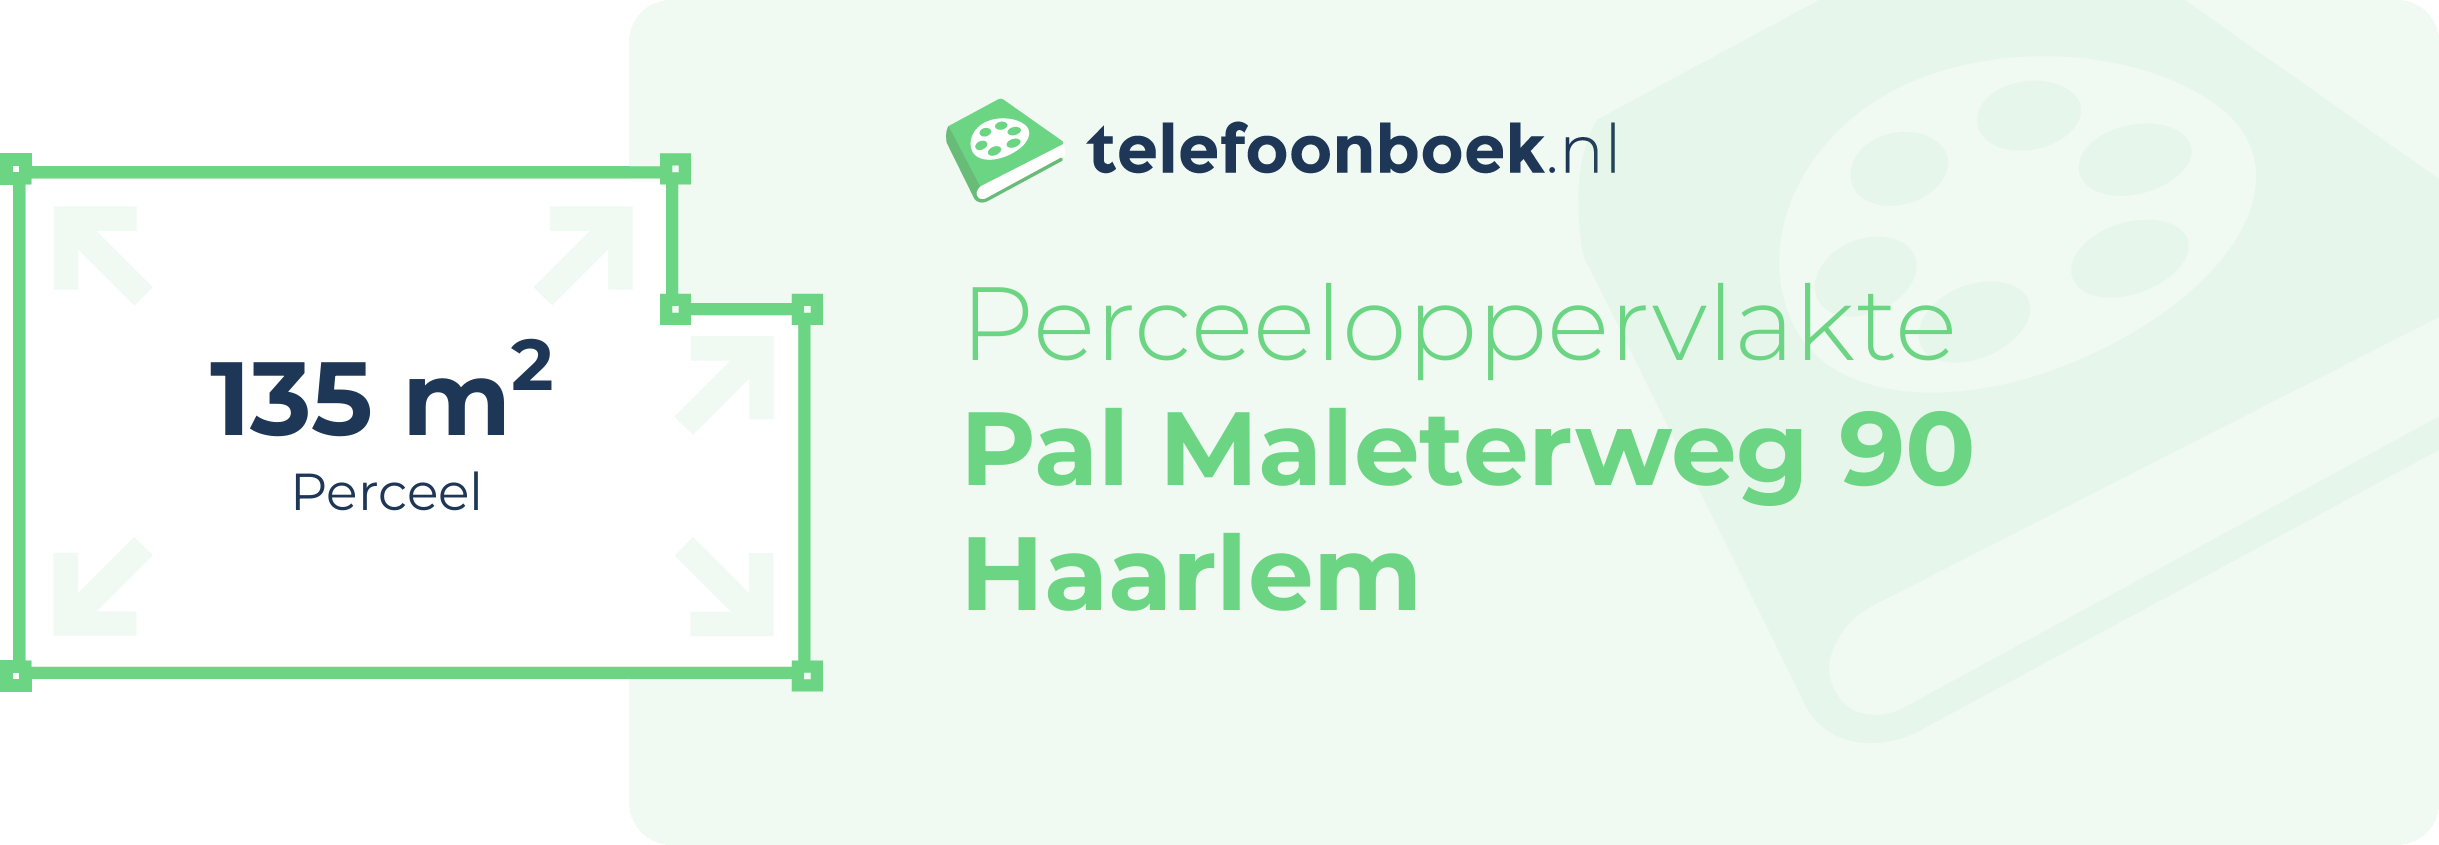 Perceeloppervlakte Pal Maleterweg 90 Haarlem